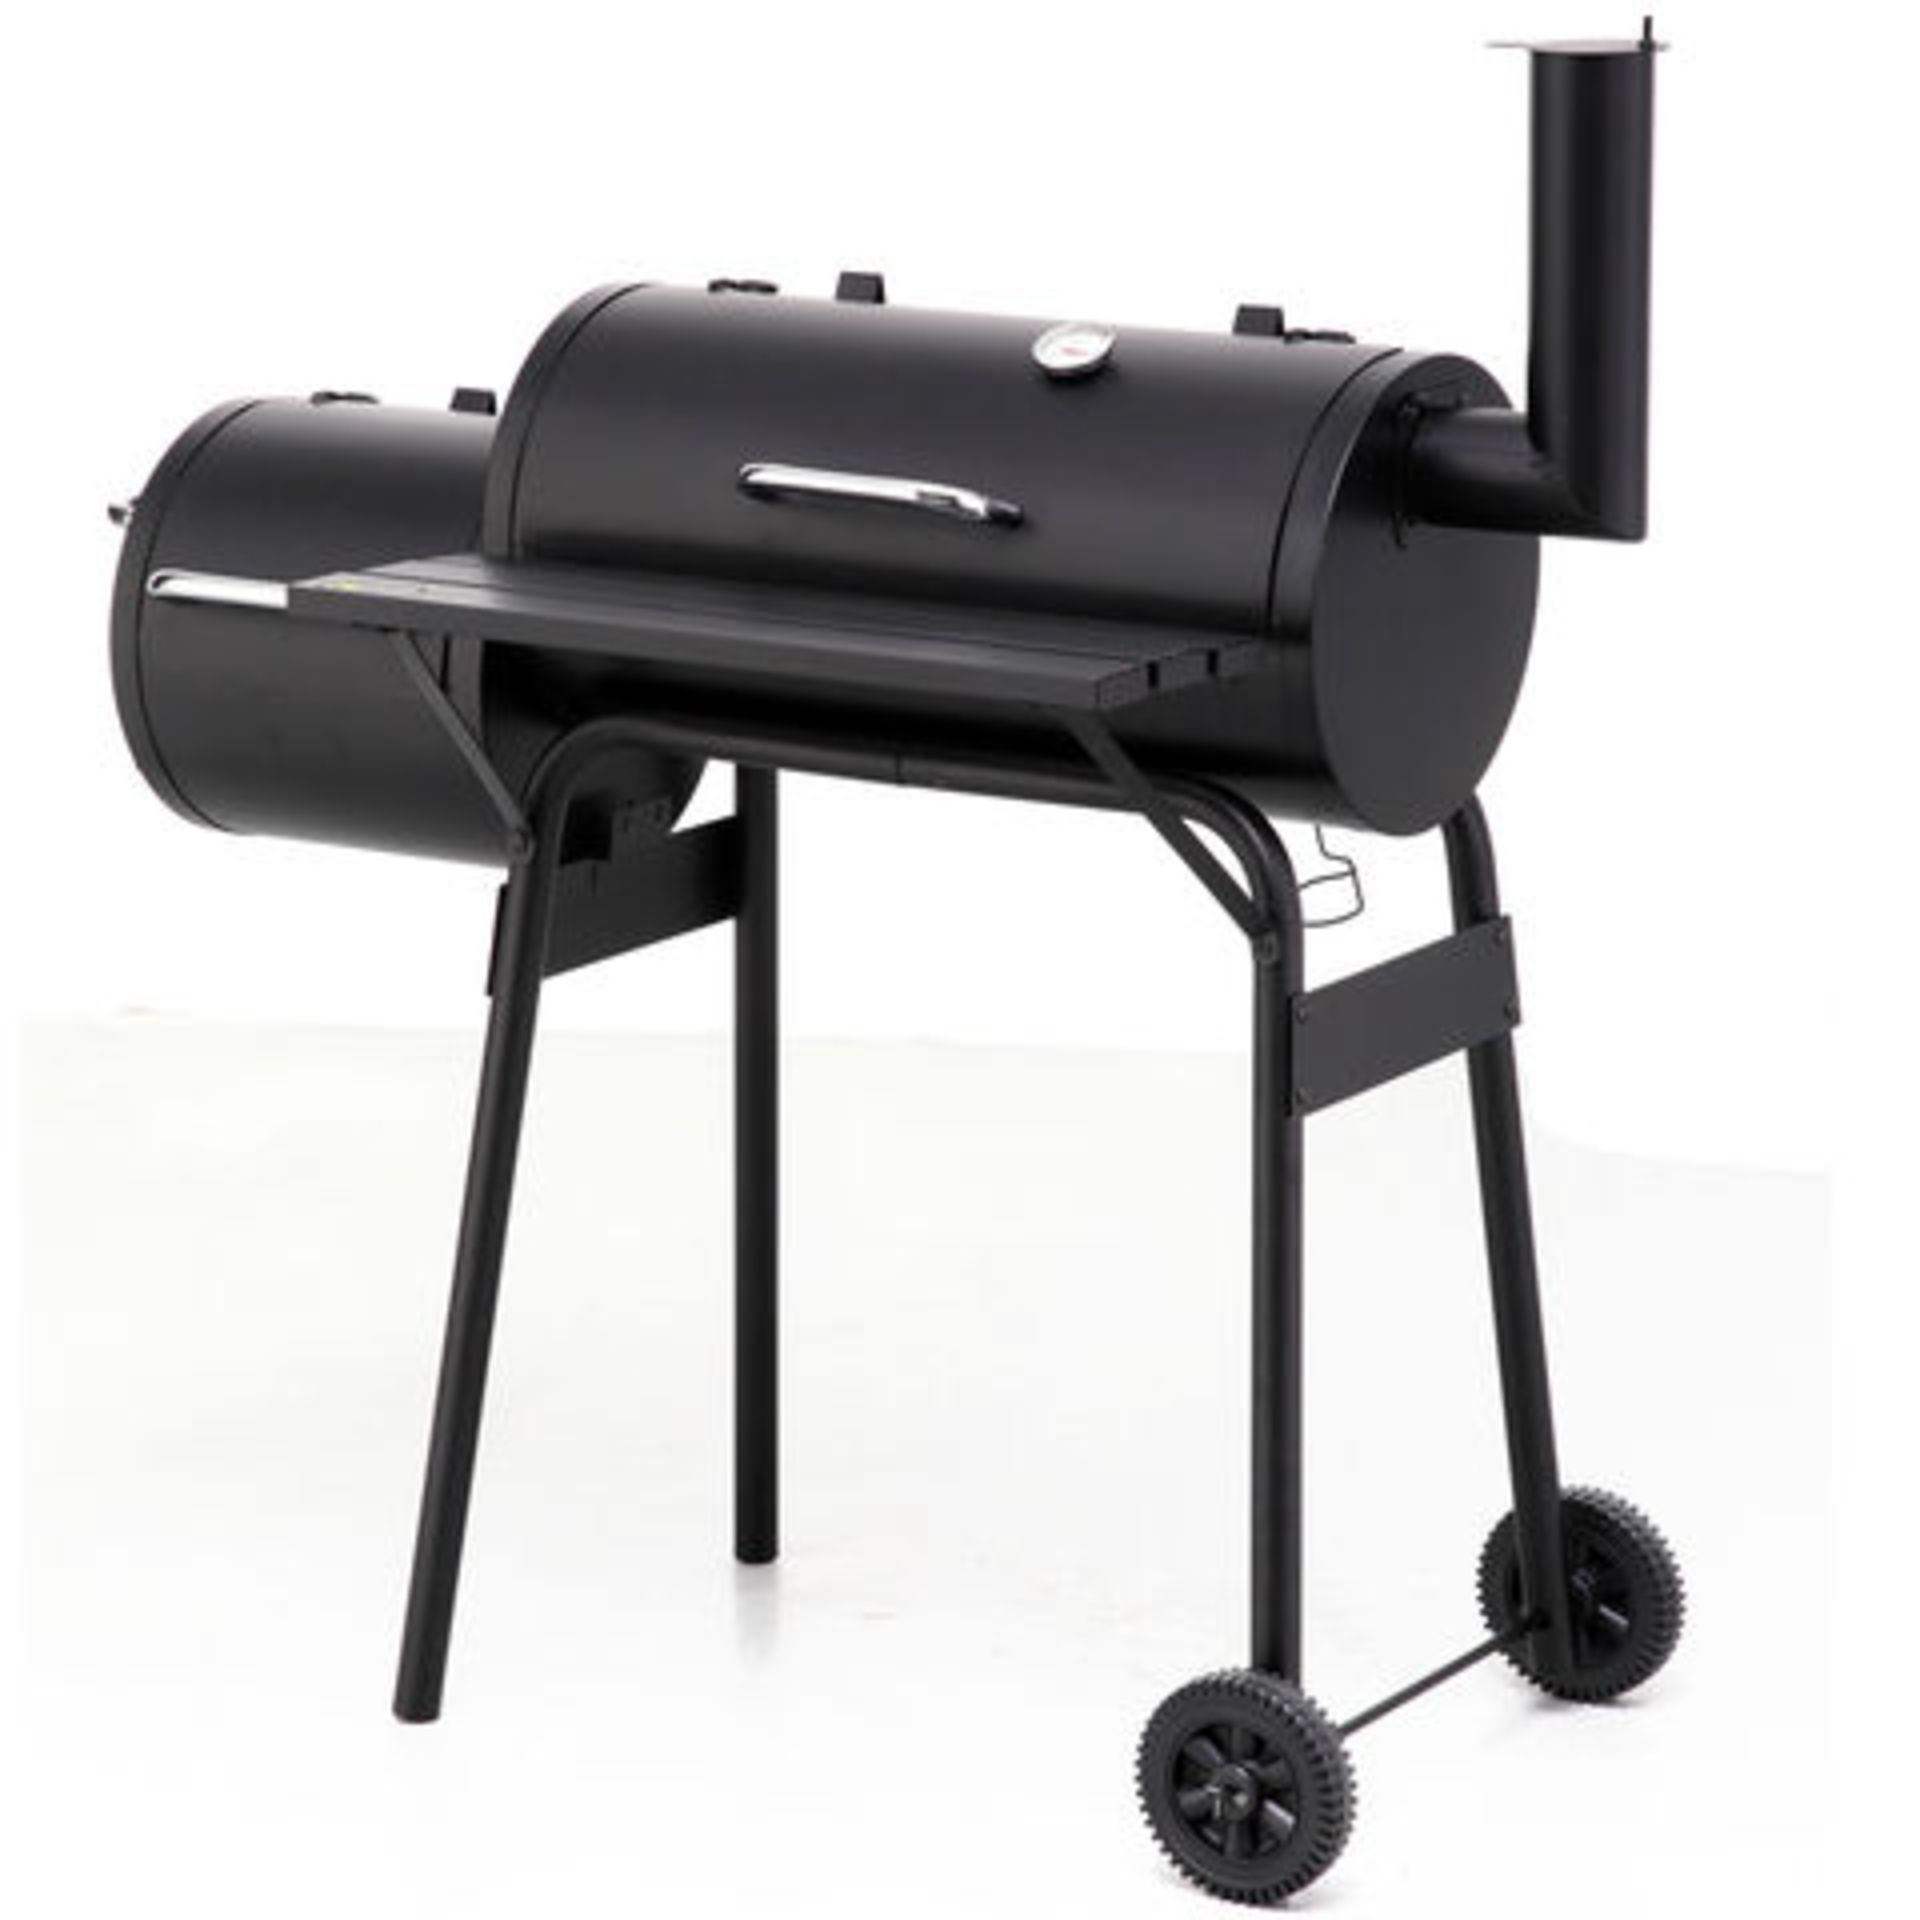 1 x Tepro Wichita Smoker BBQ Grill With Side Chamber and Chimney - Western Style Smoker - Unused